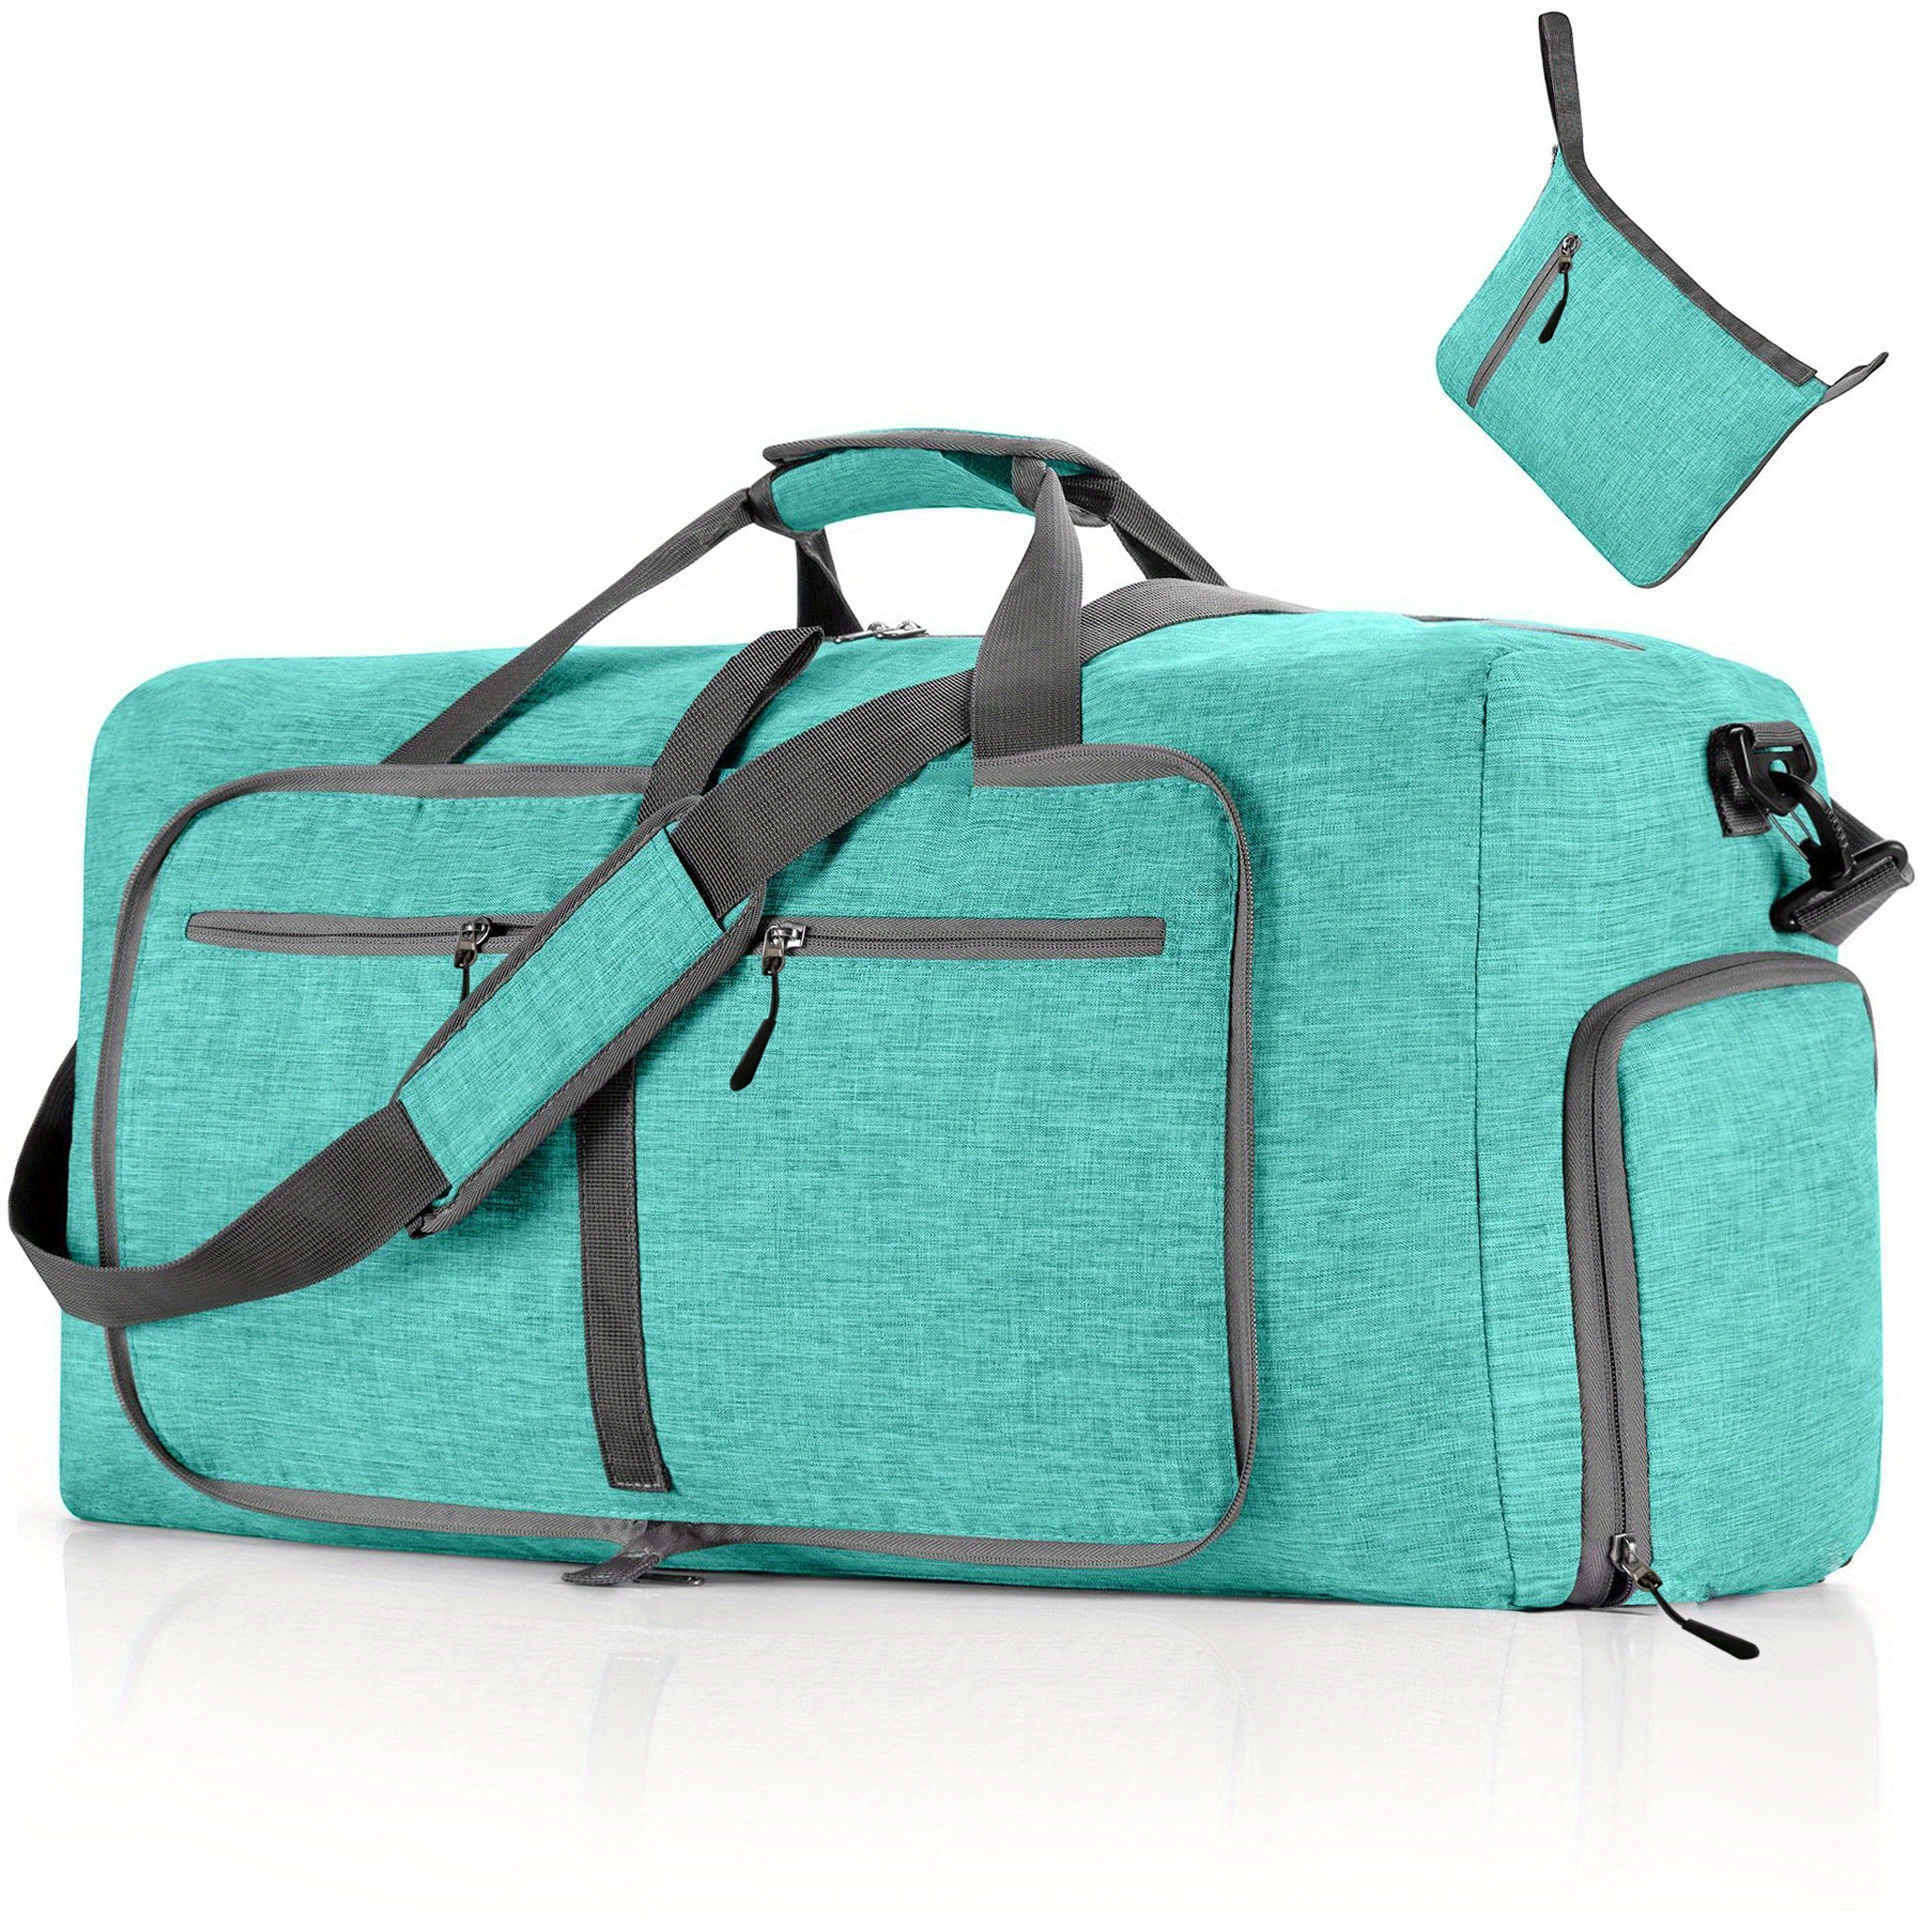 Portable Large Capacity Handbag, Foldable Solid Color Shoulder Bag, Perfect Travel Duffel Bag For Trip